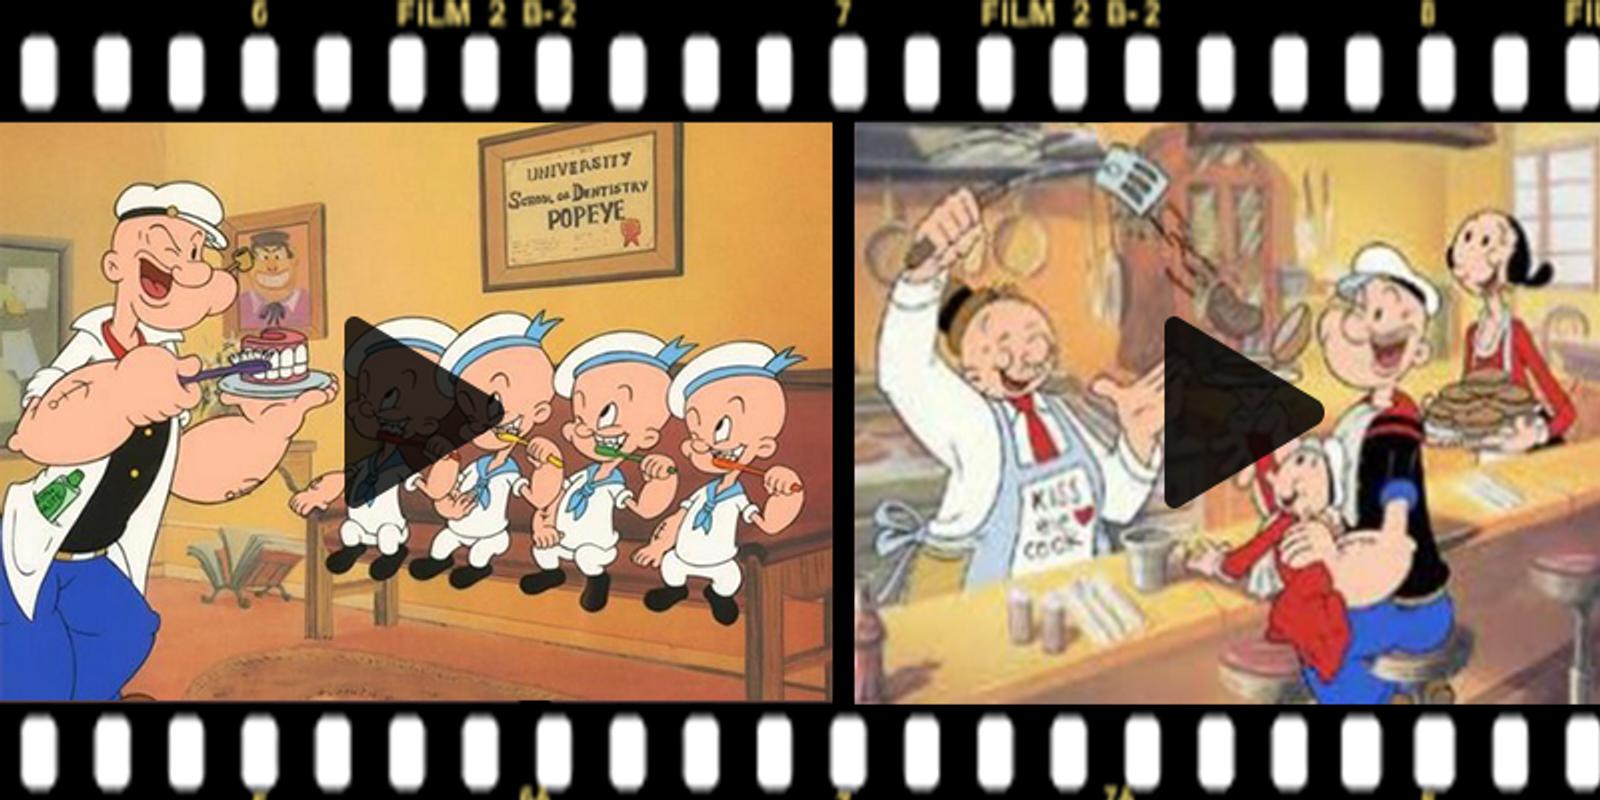 Koleksi Video Popeye For Android APK Download